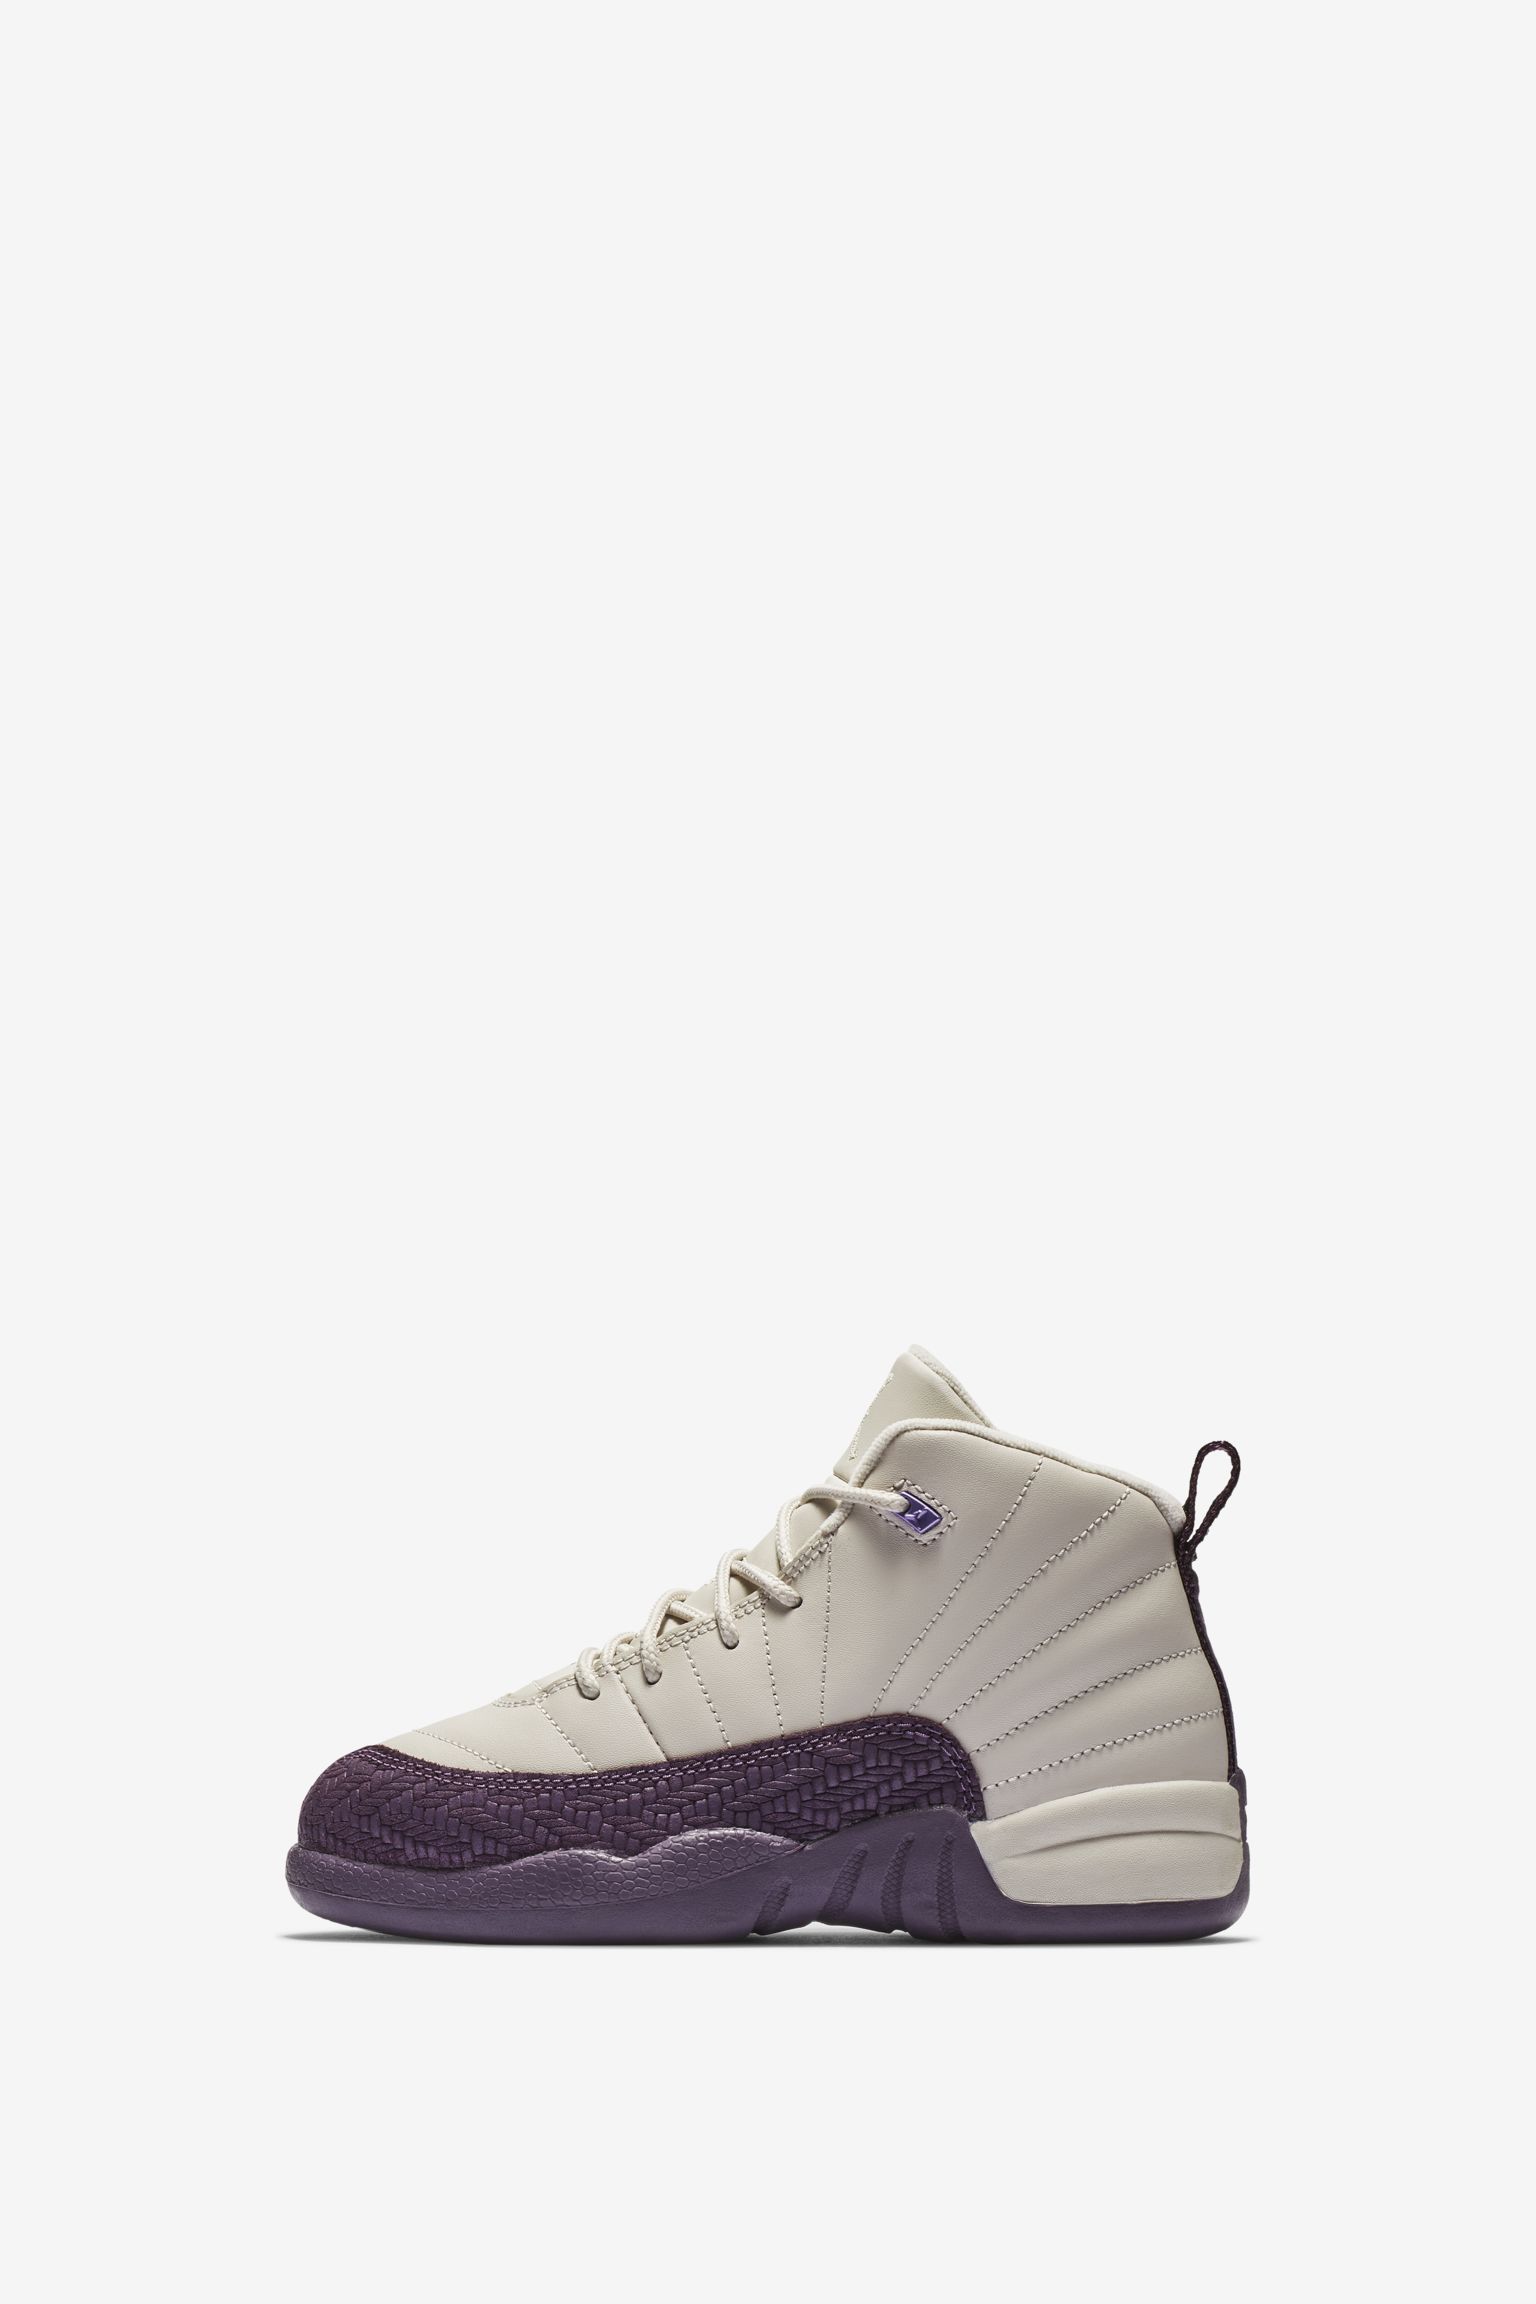 pro purple 12s